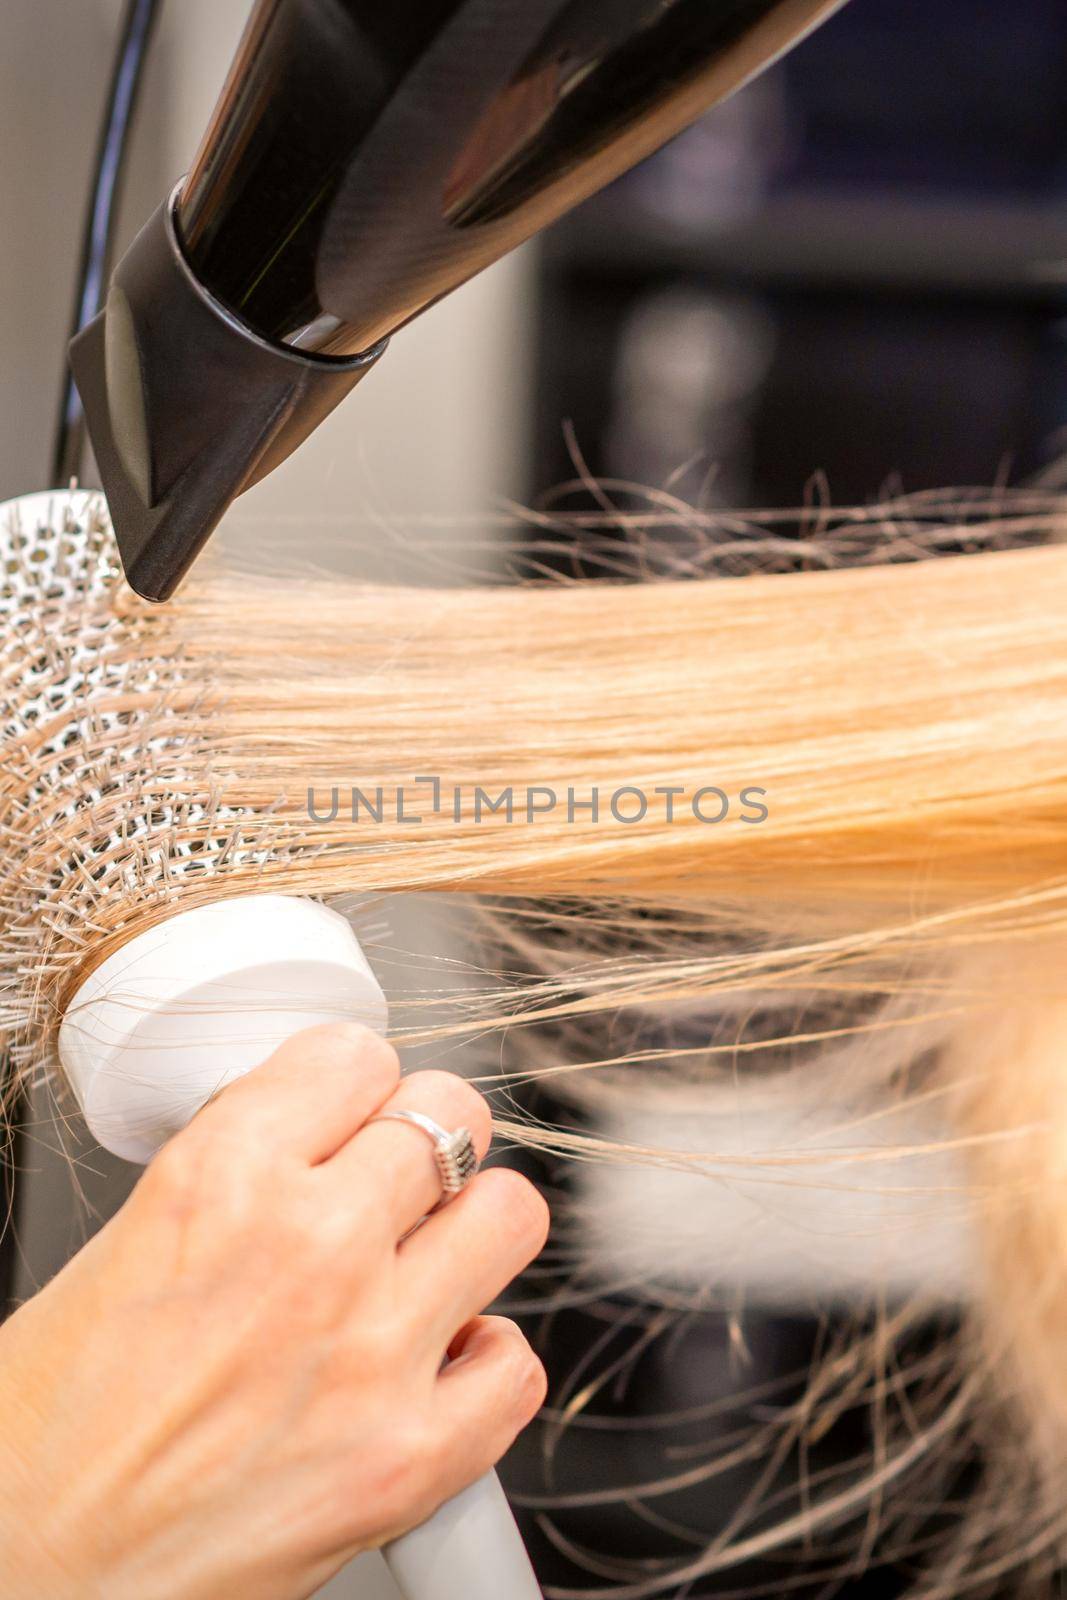 Drying straight blond hair with black hairdryer and white round brush in hairdresser salon, close up. by okskukuruza